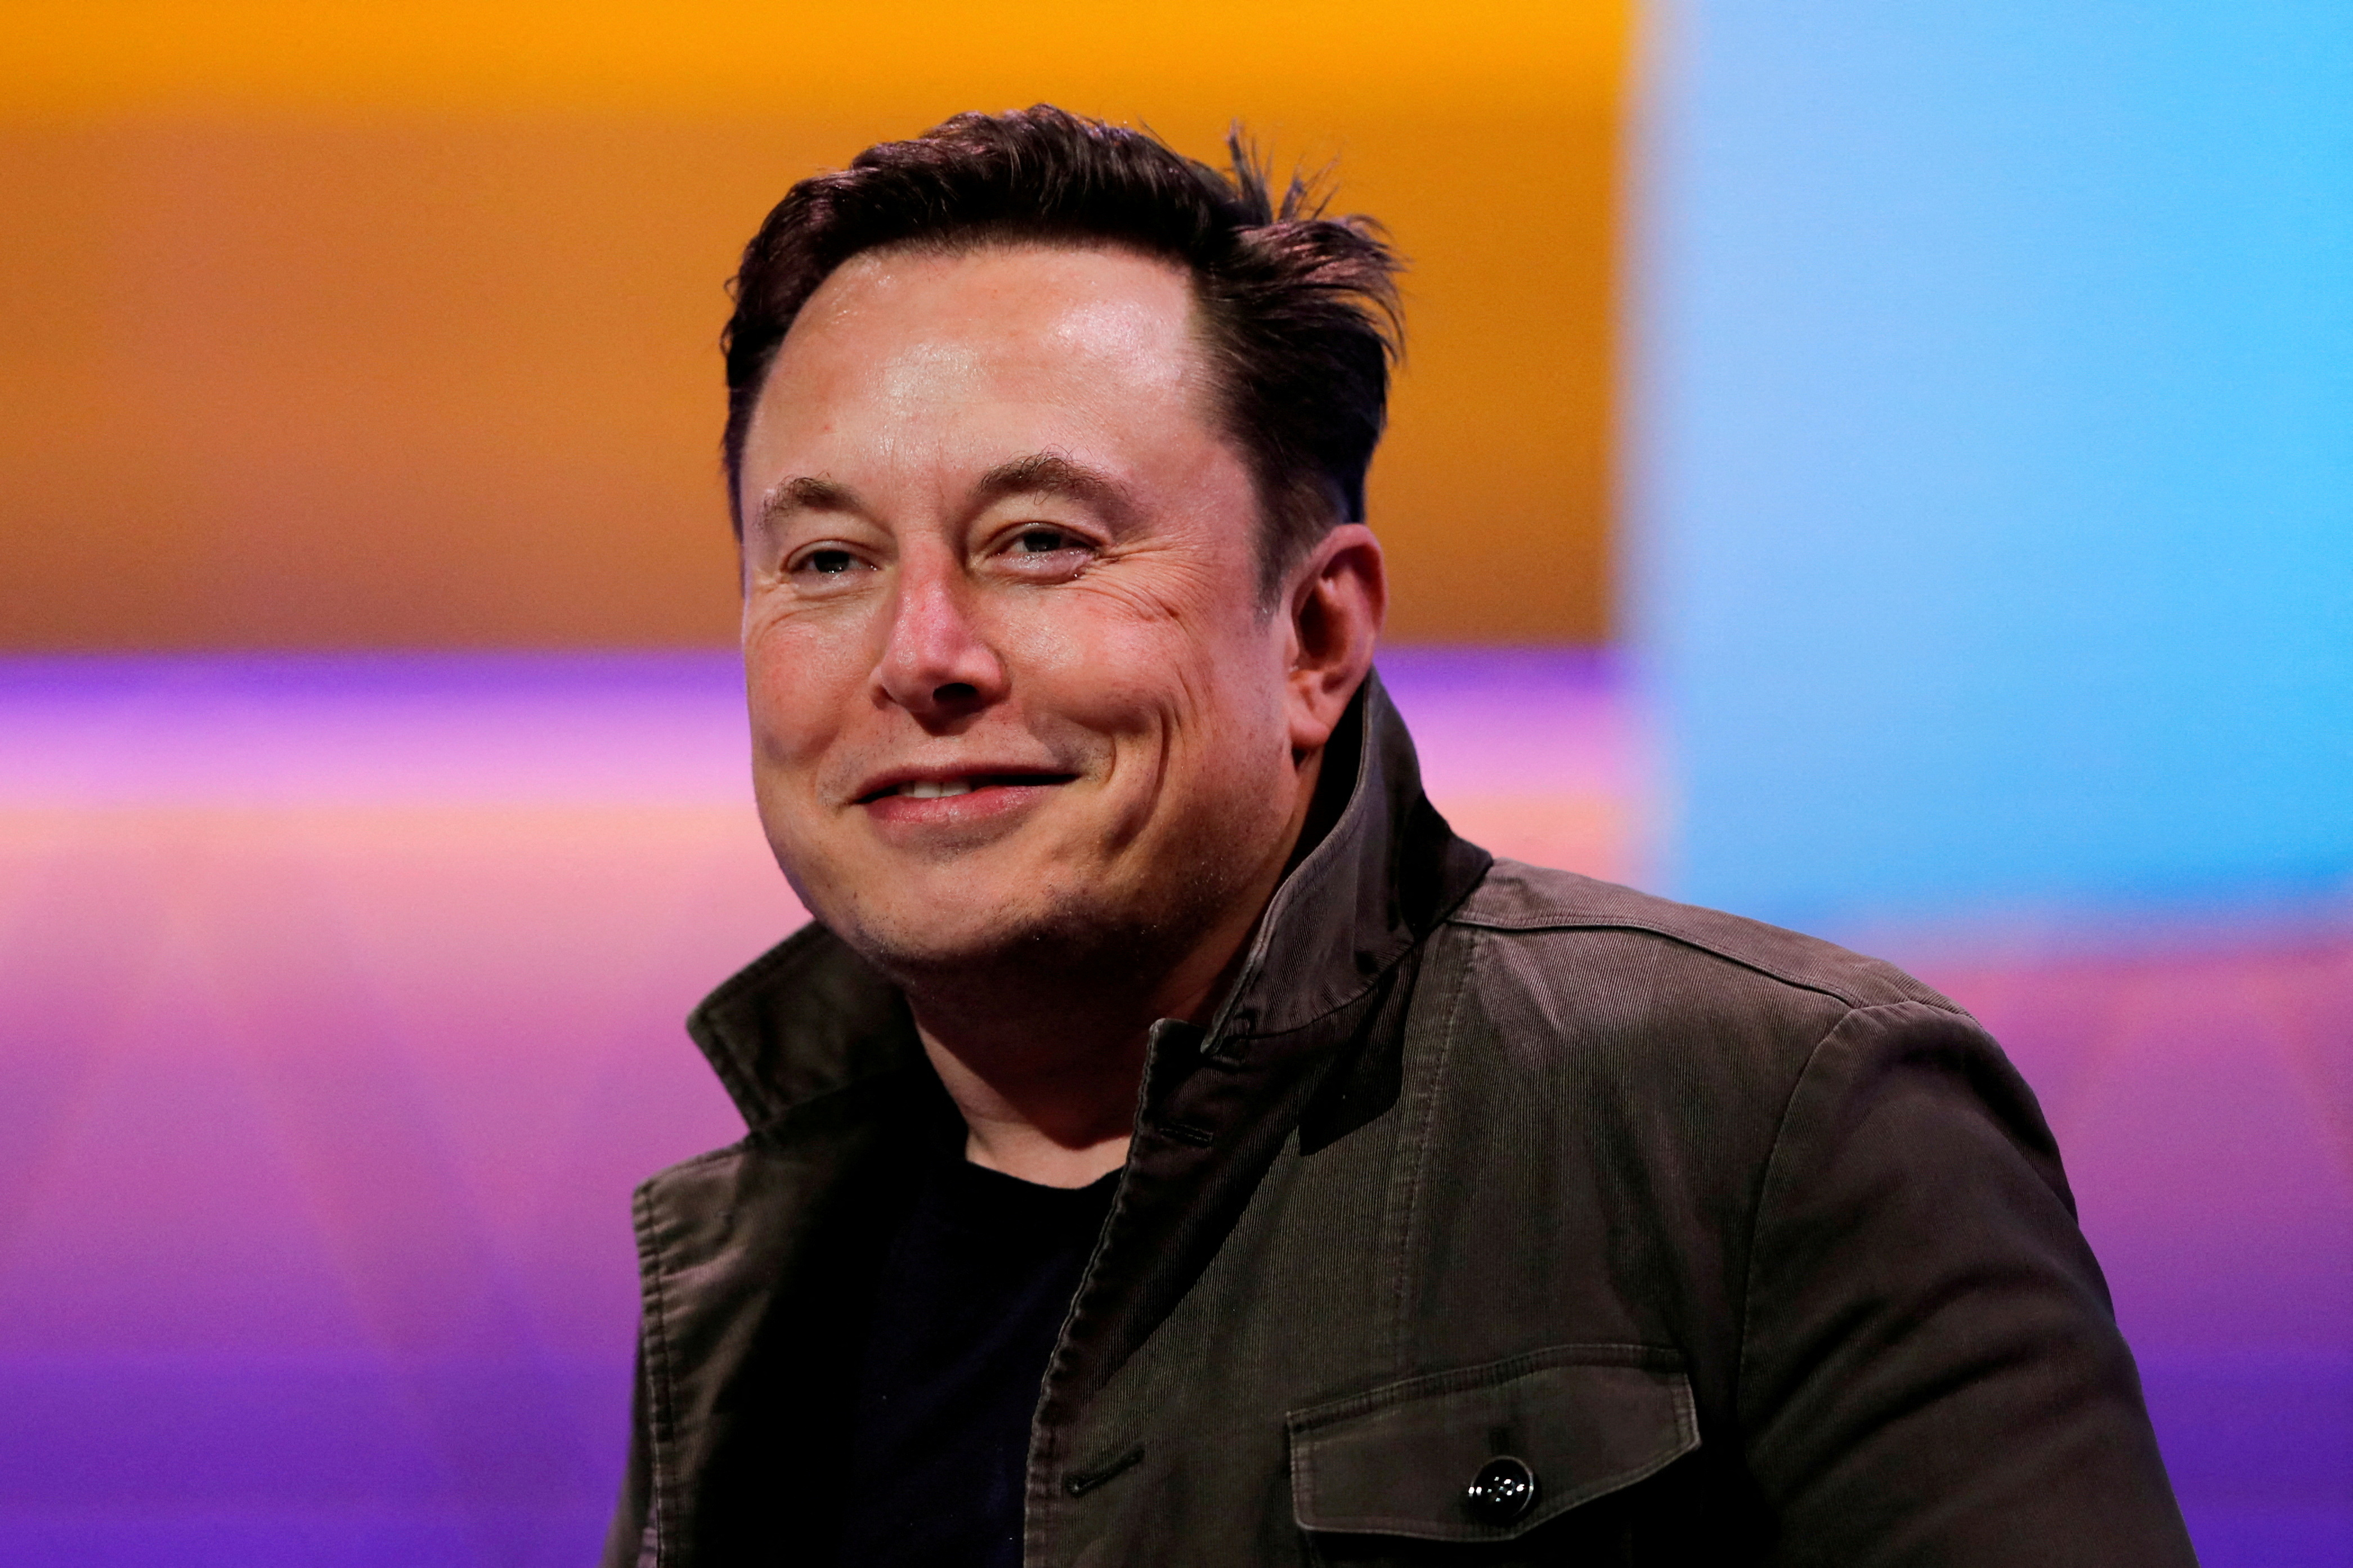 Elon smiling